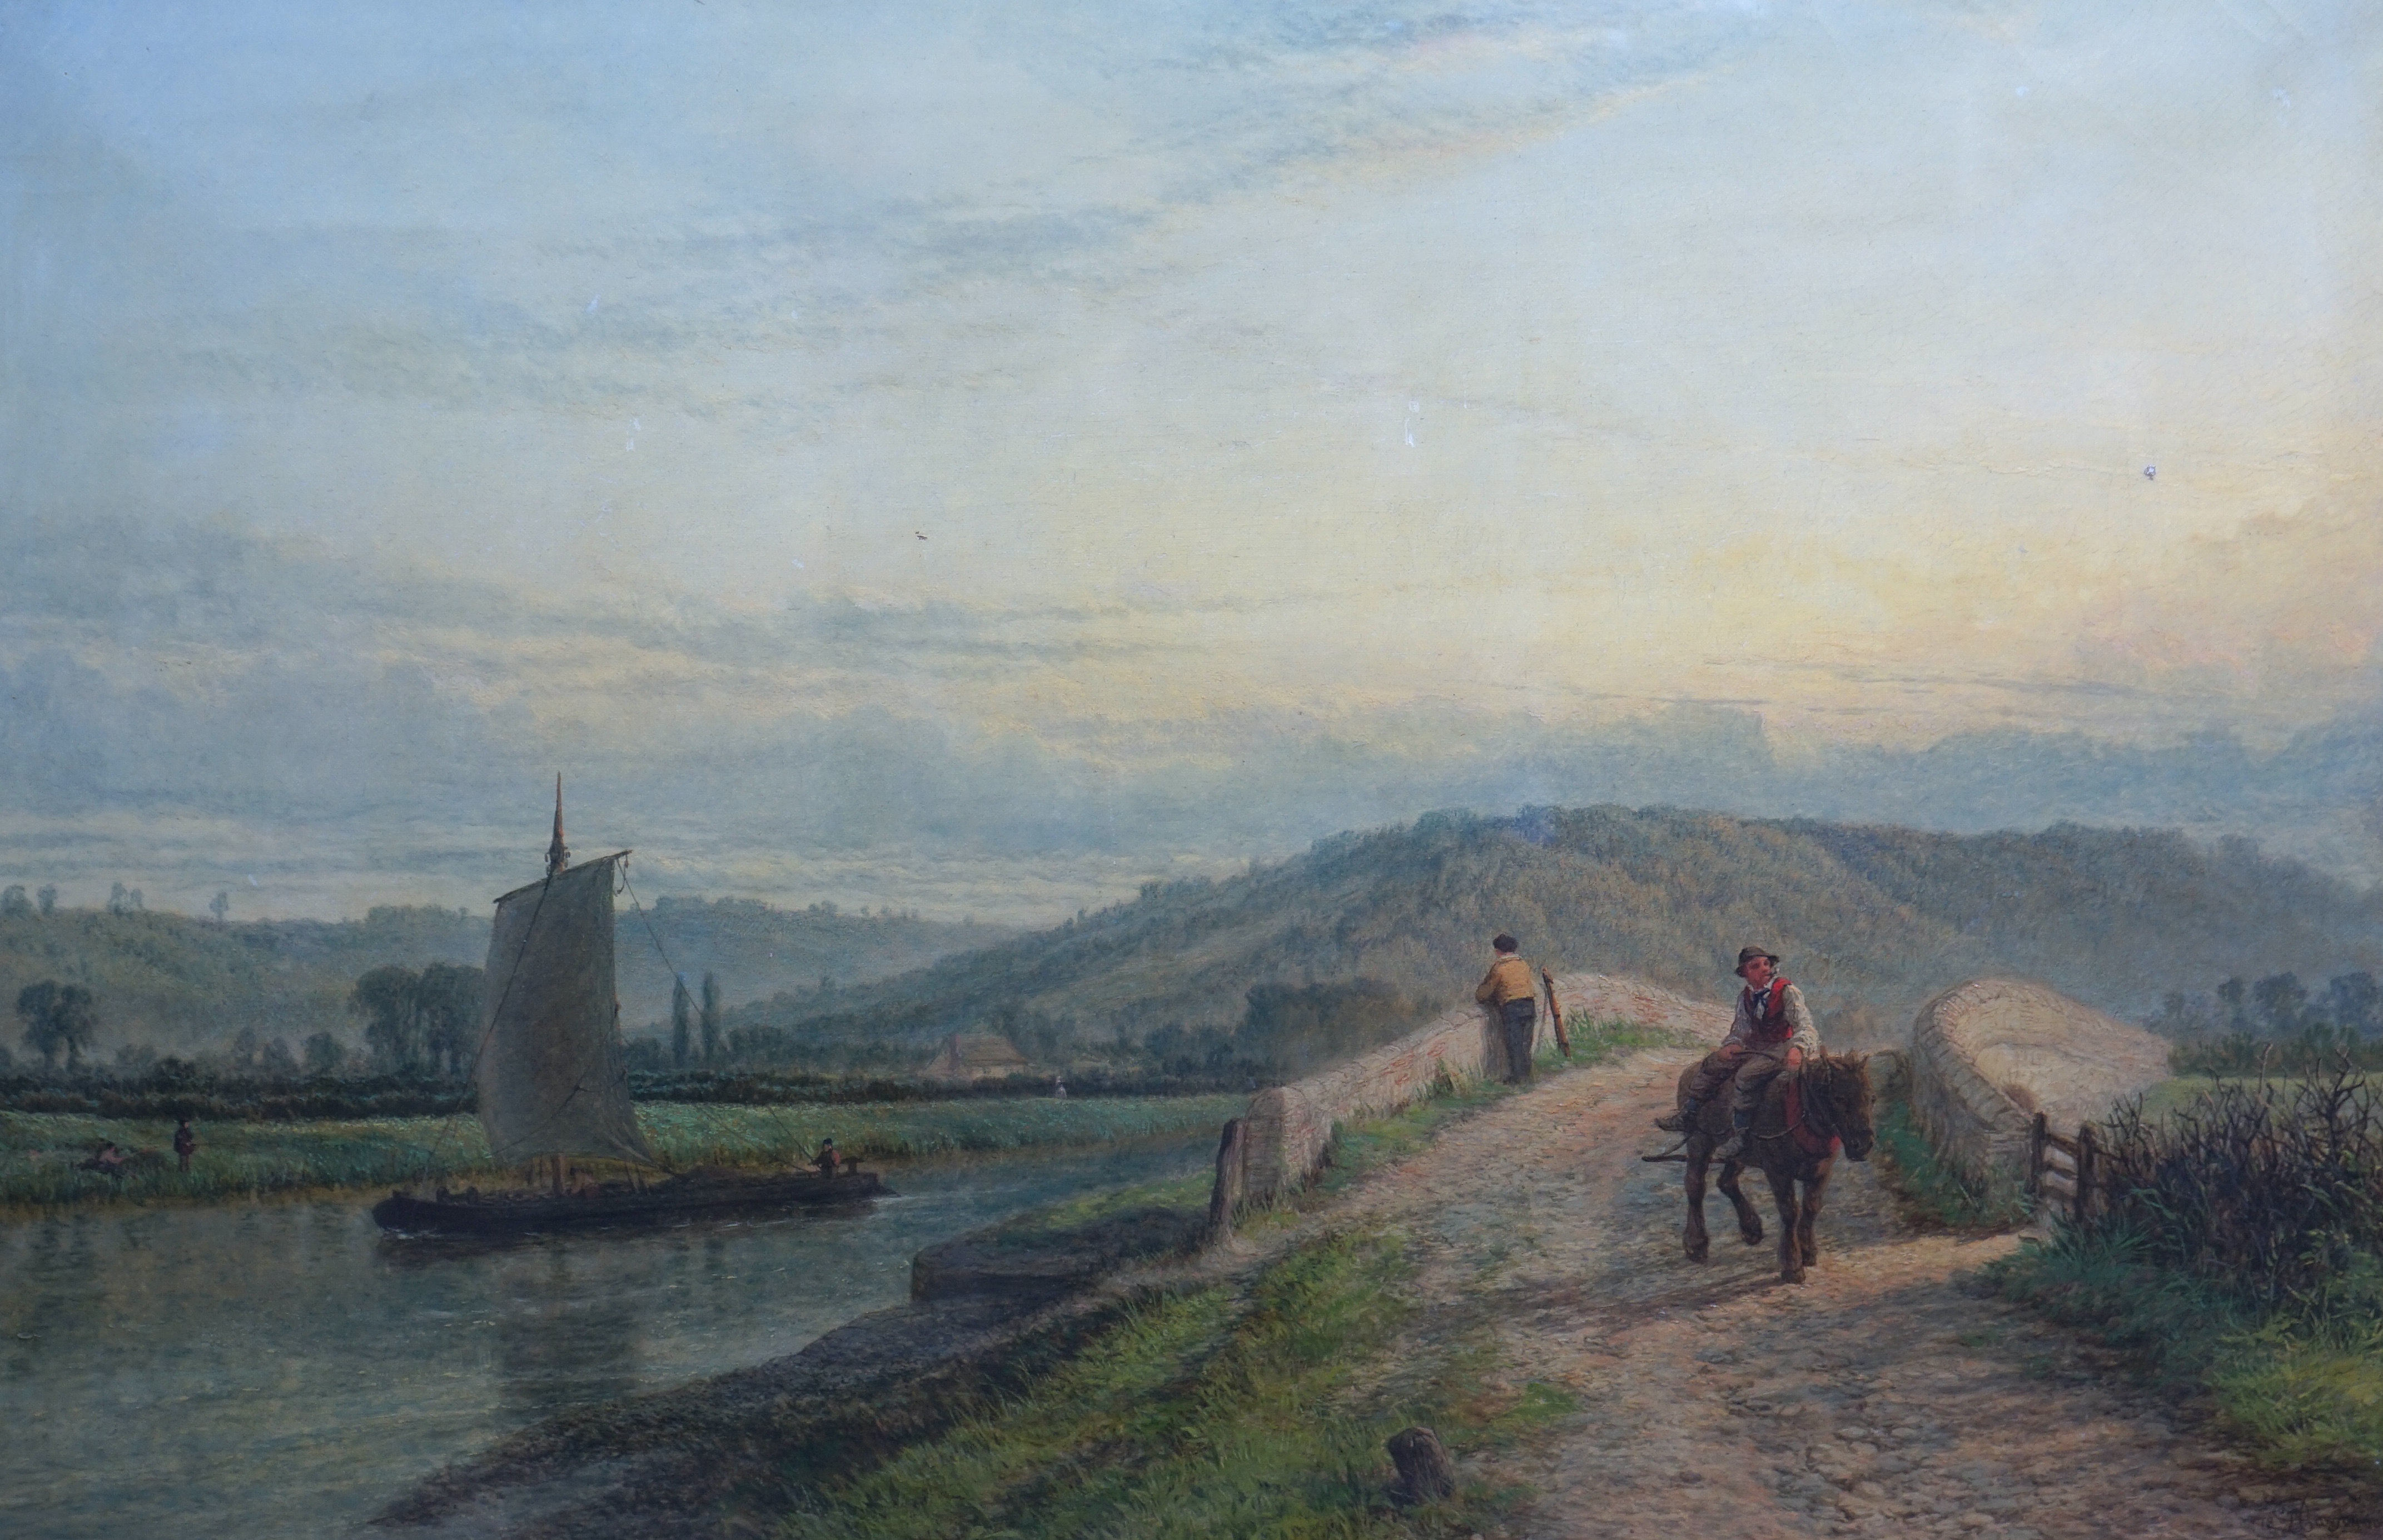 Henry Dawson (British, 1811-1878), 'Colwich Hills', oil on canvas, 50 x 75cm